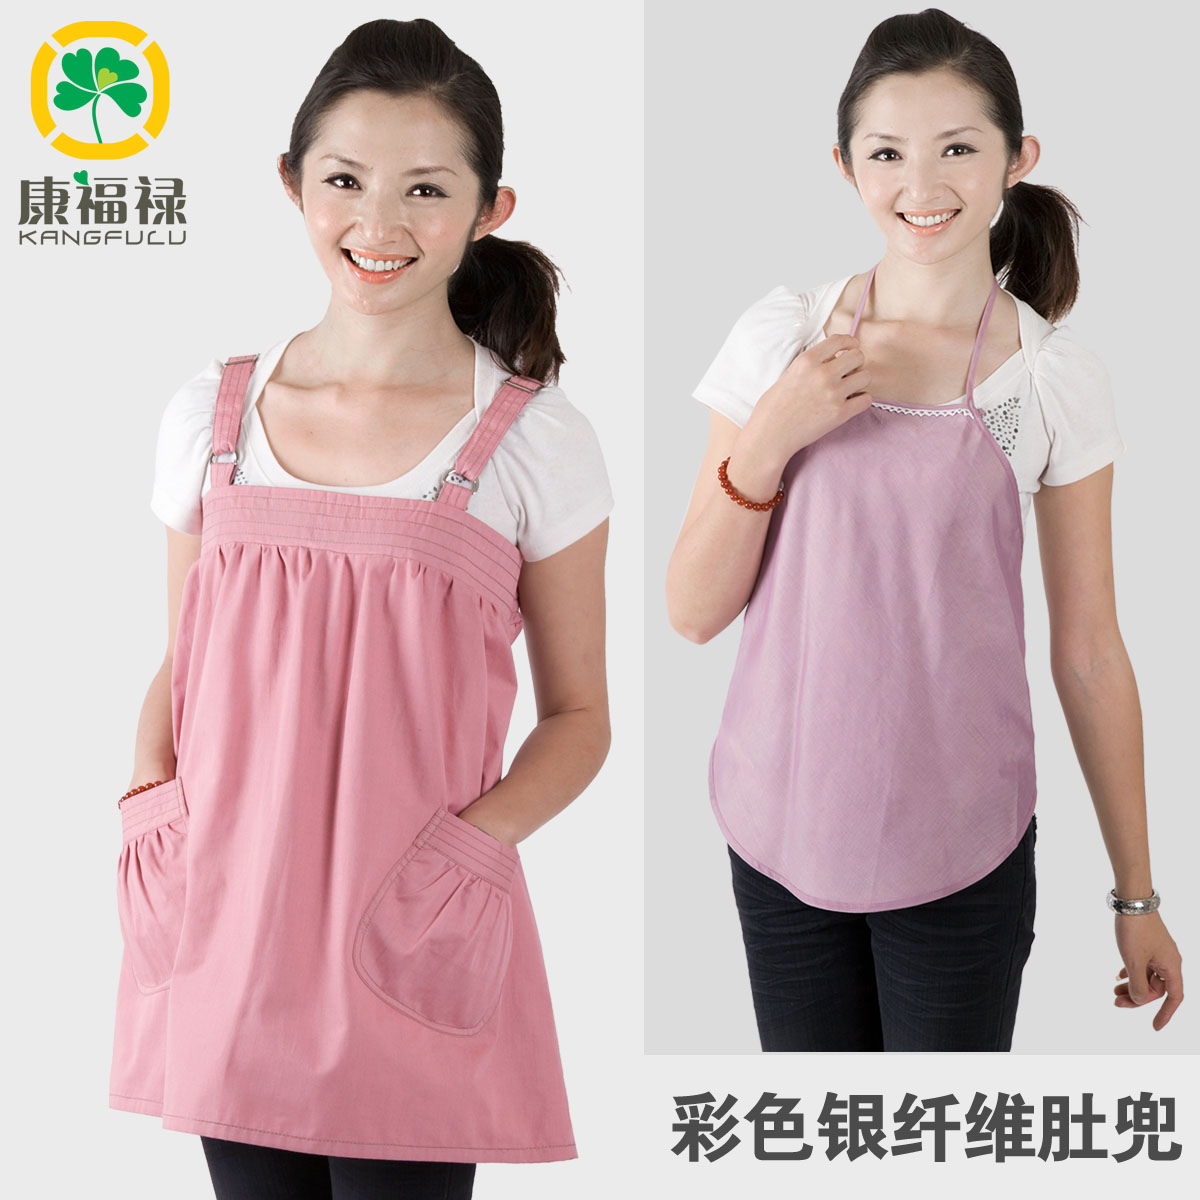 Silver fiber radiation-resistant maternity clothing maternity radiation-resistant clothes radiation-resistant vest 905a